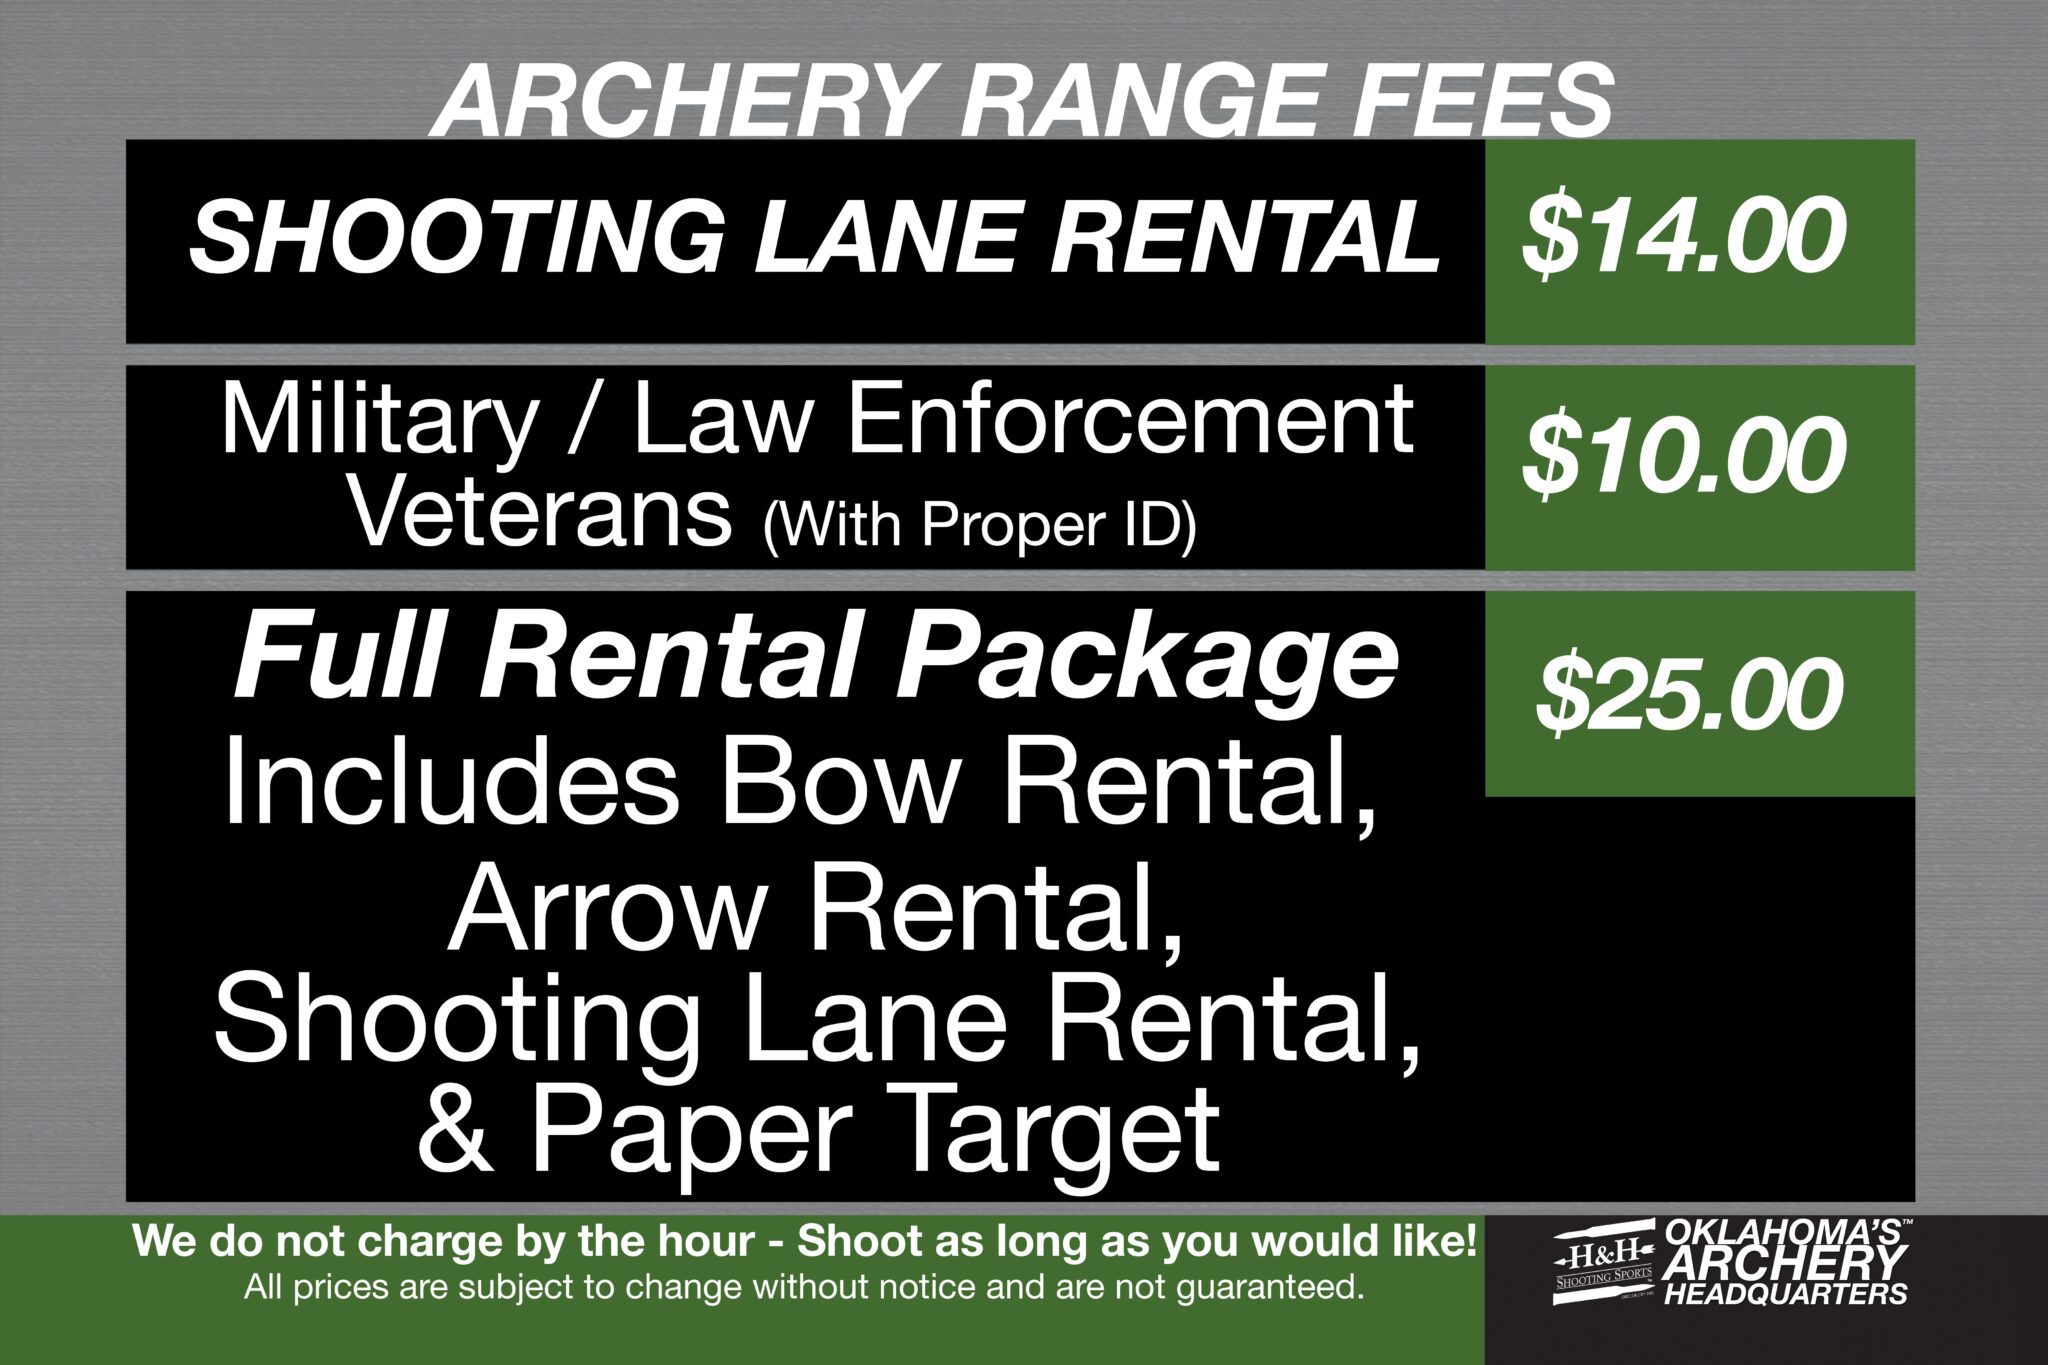 The list of Archery Range Rates